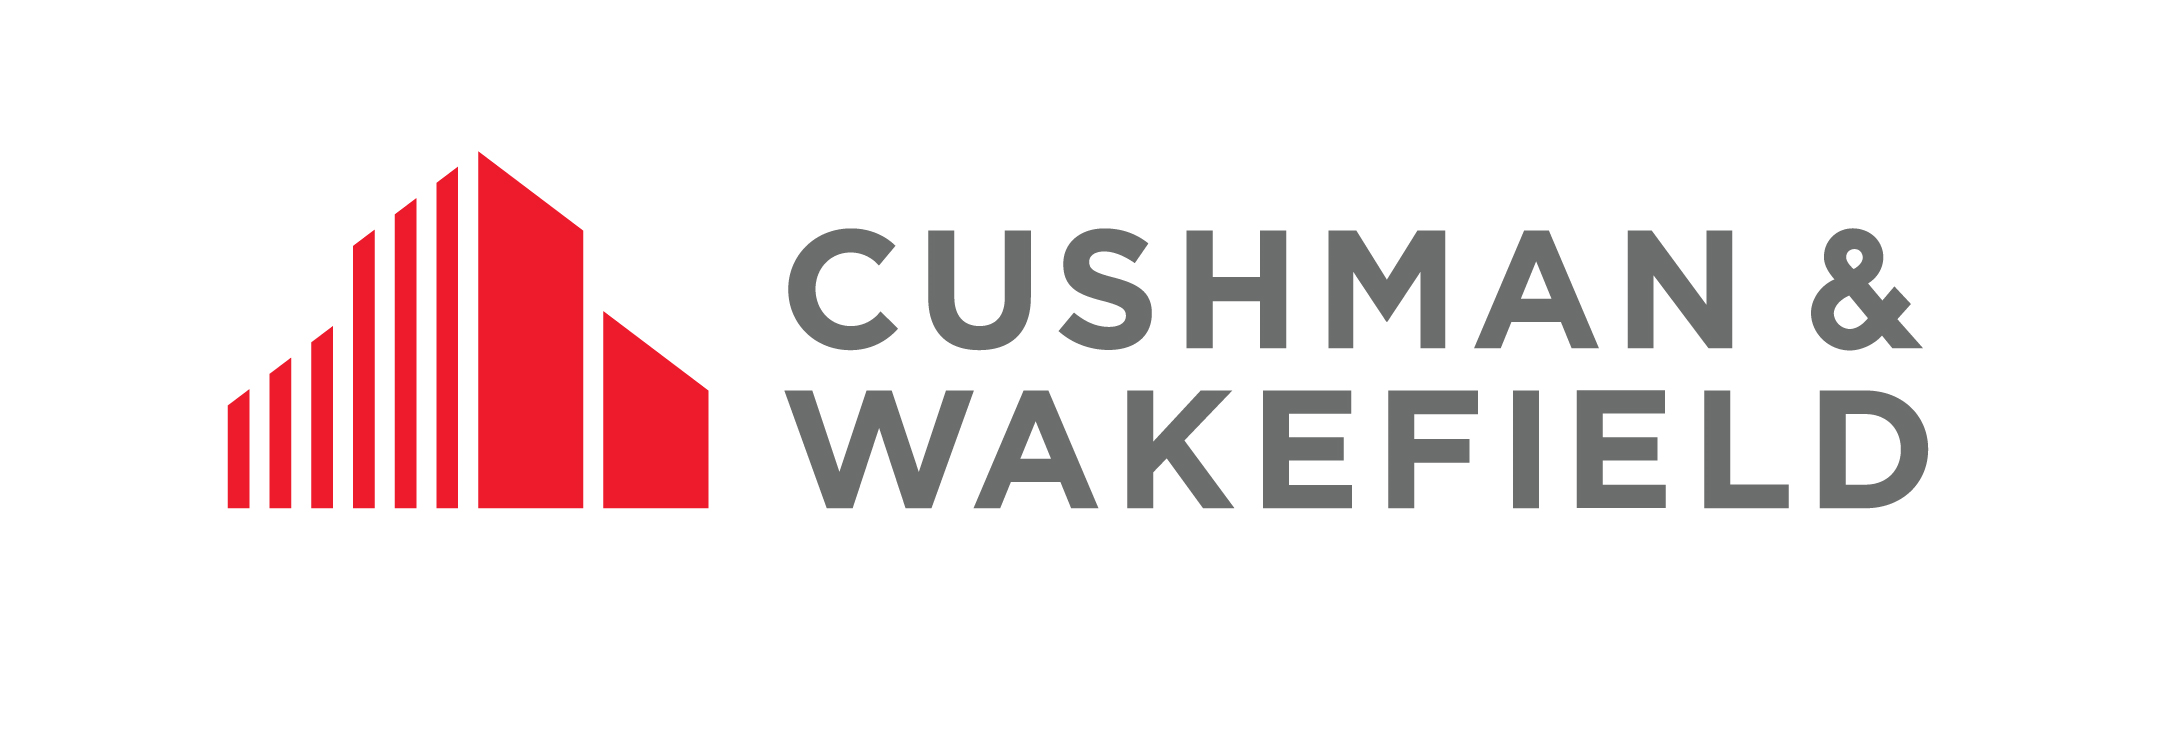 Cushman & Wakefield, Inc. logo